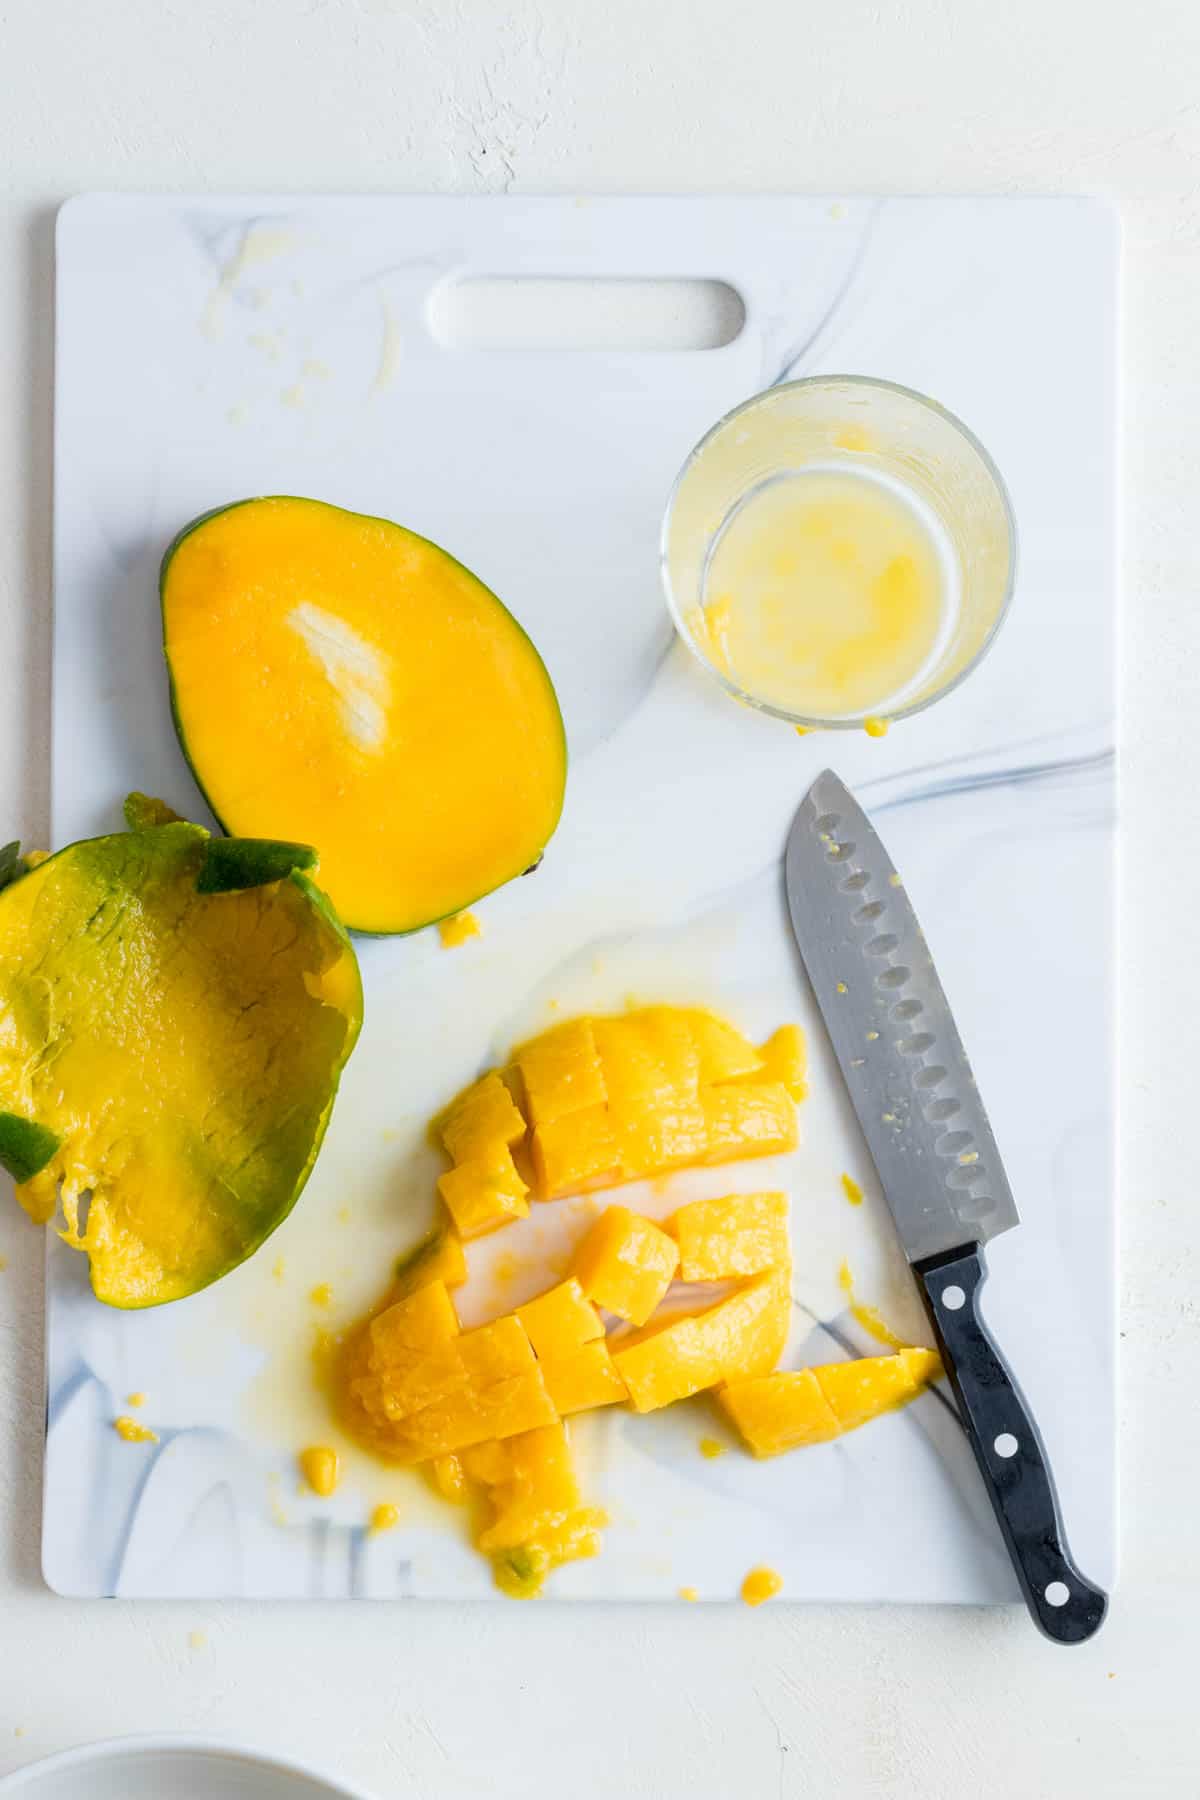 Diced mango half on white cutting board.